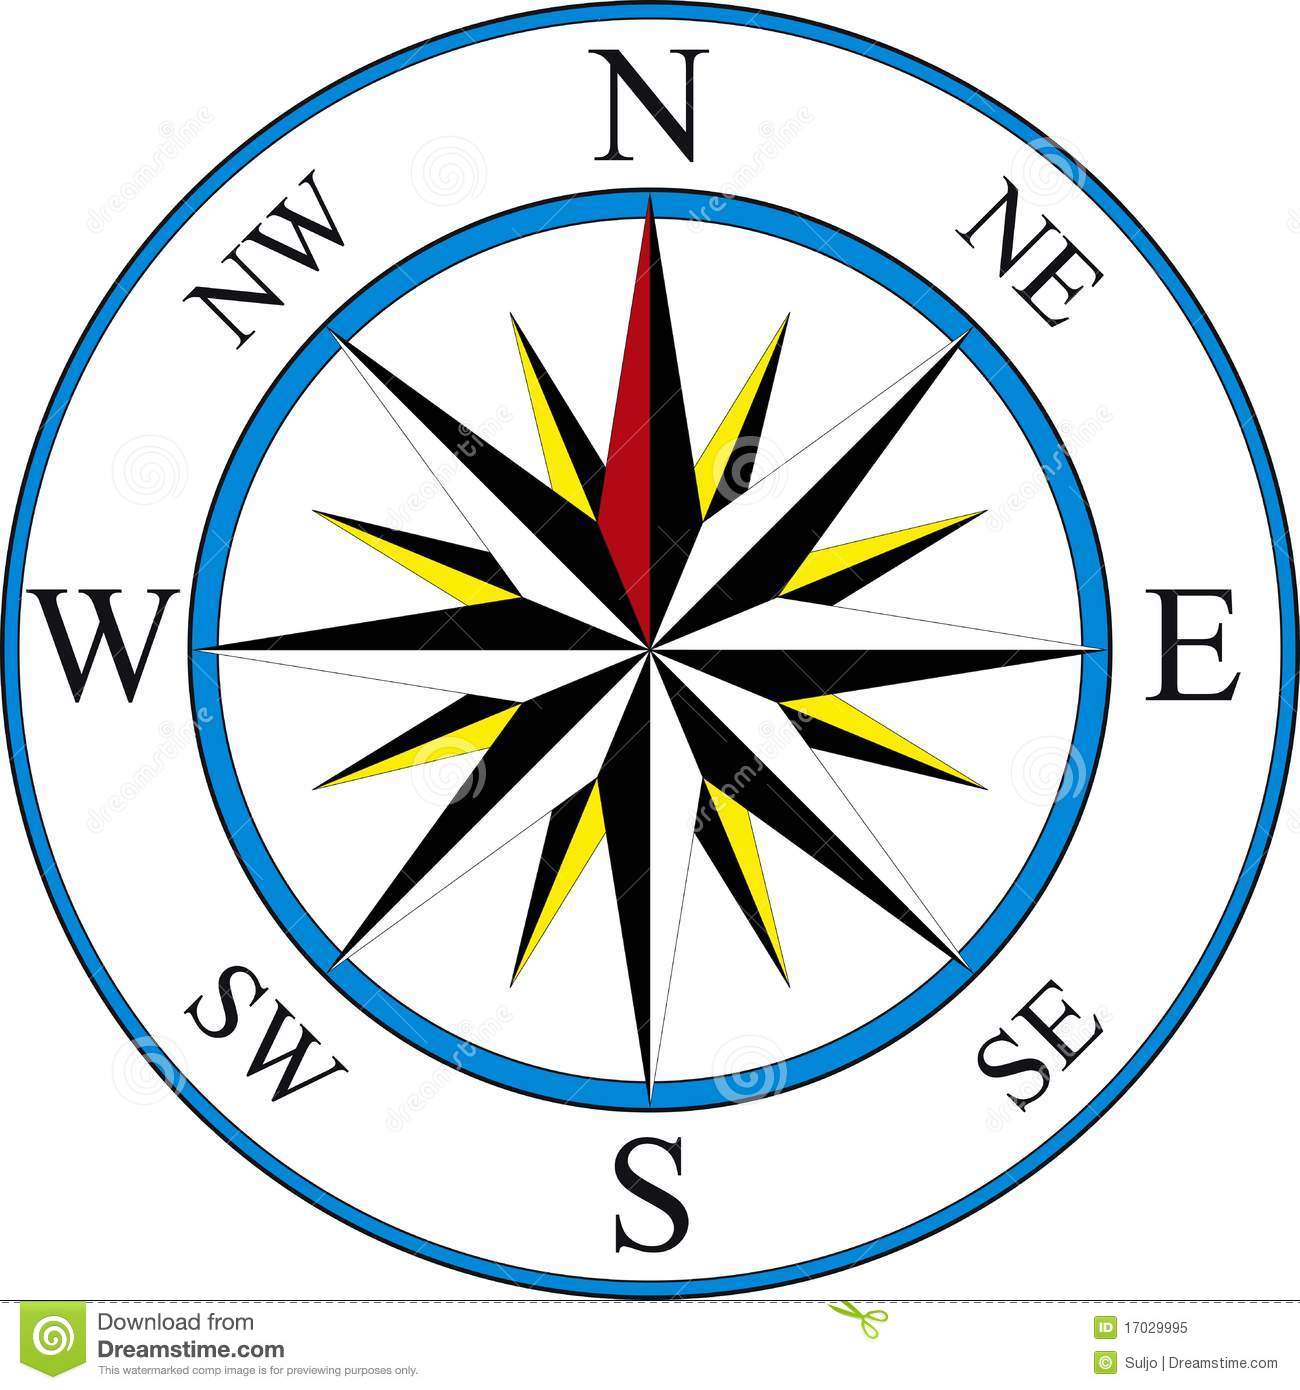 Simple Compass Illustration